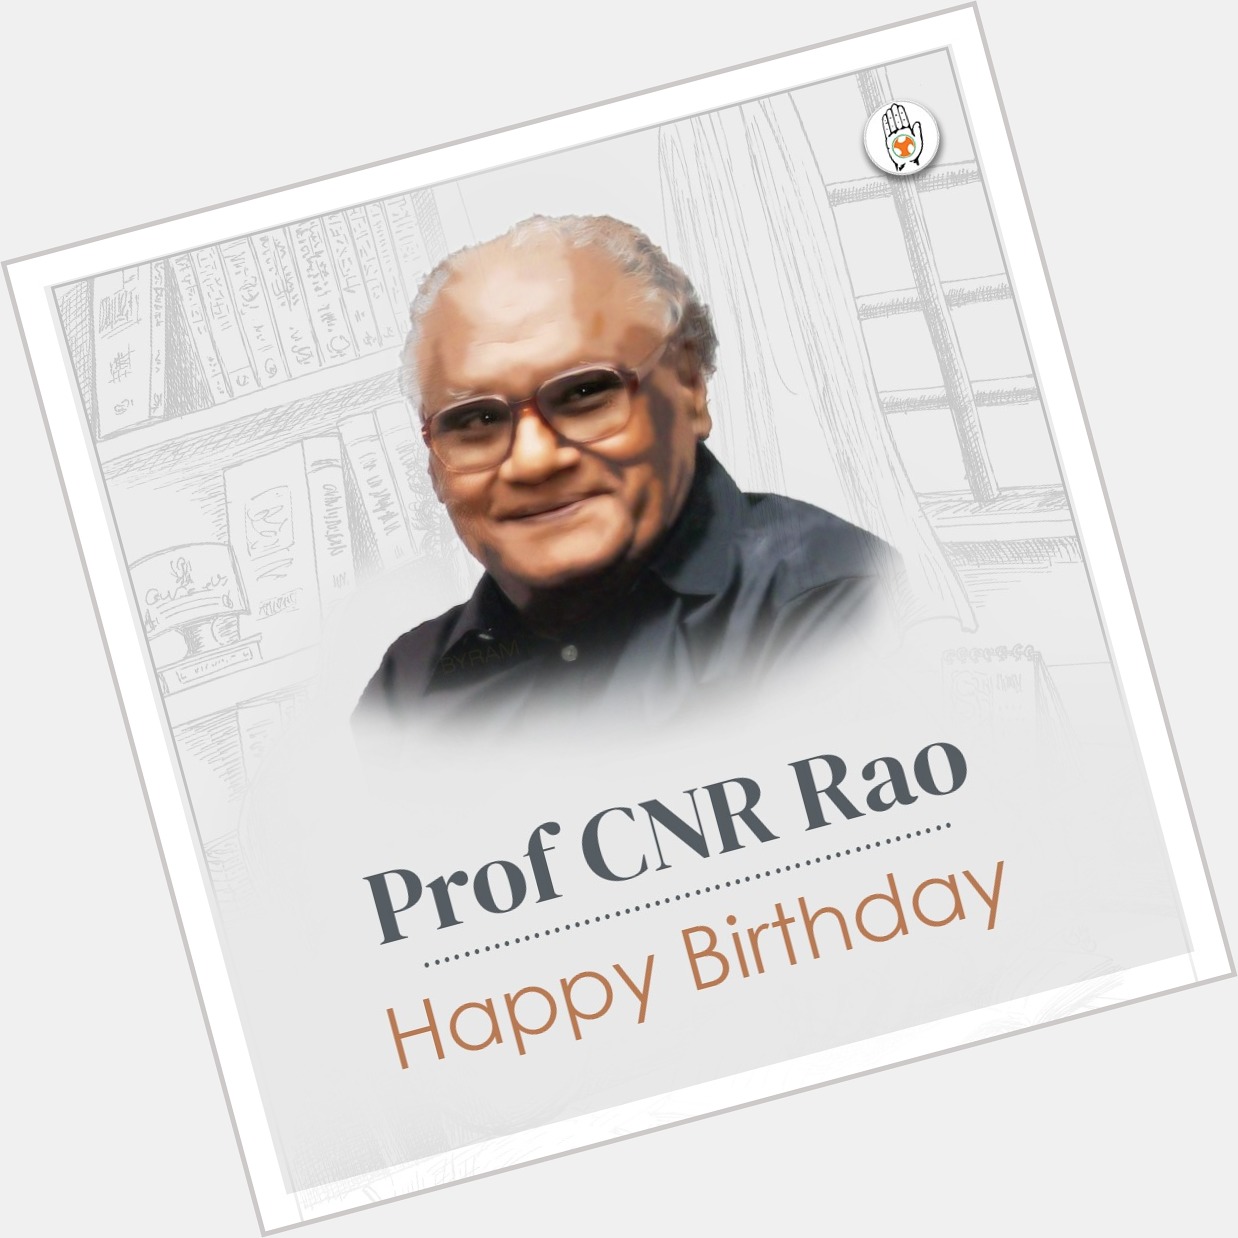 Wishing Eminent Scientist Bharat Ratna, Prof CNR Rao a very happy birthday. 